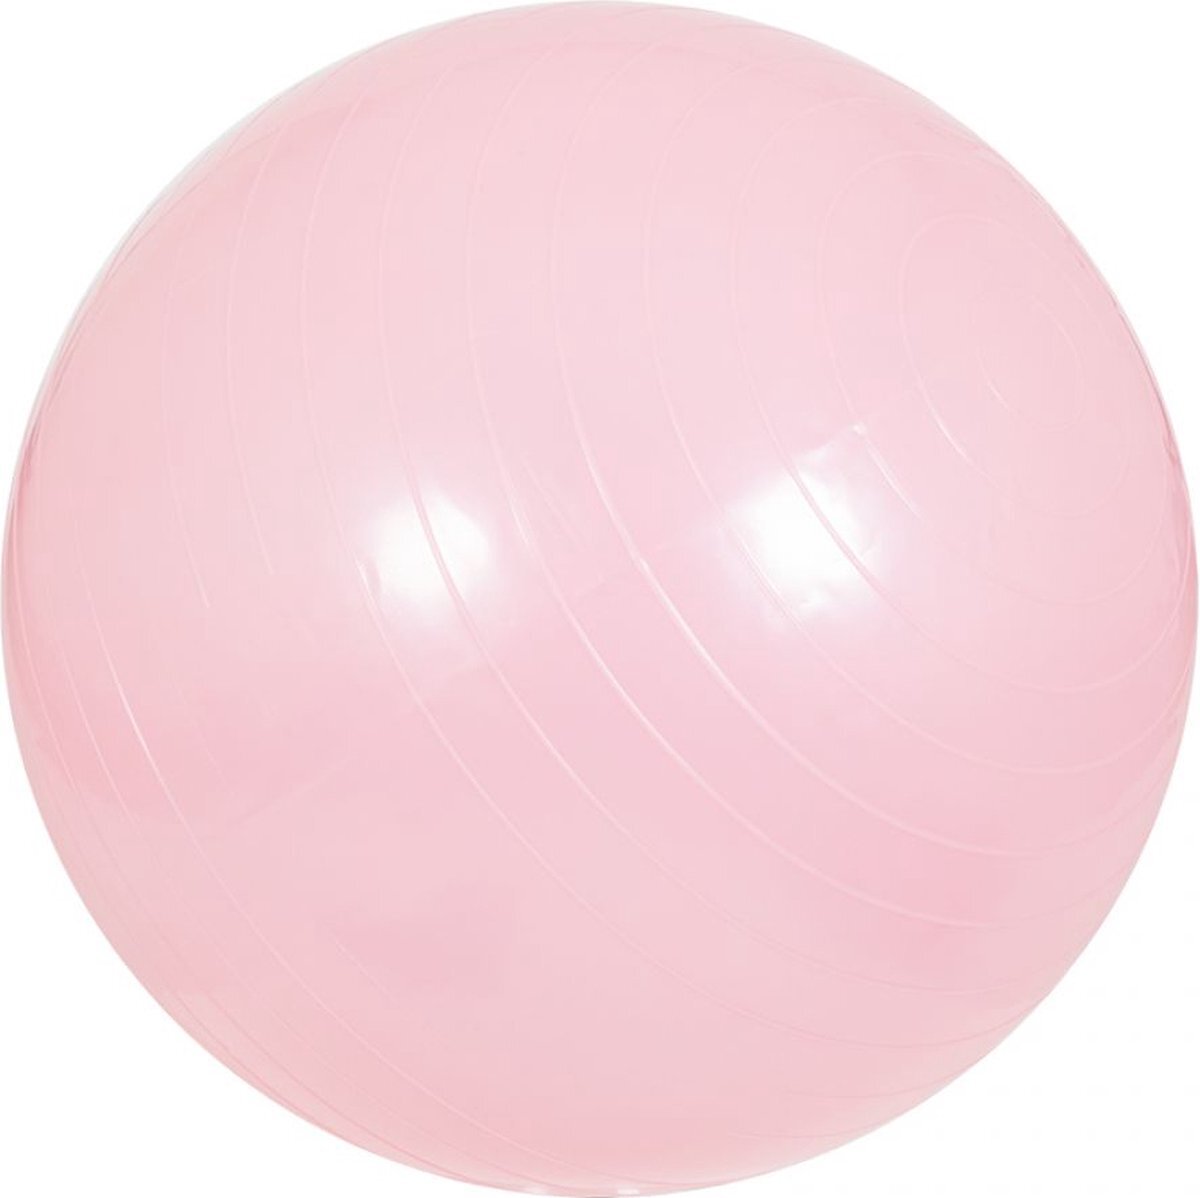 Gorilla Sports Fitness bal roze 65 cm ( met handige pomp)